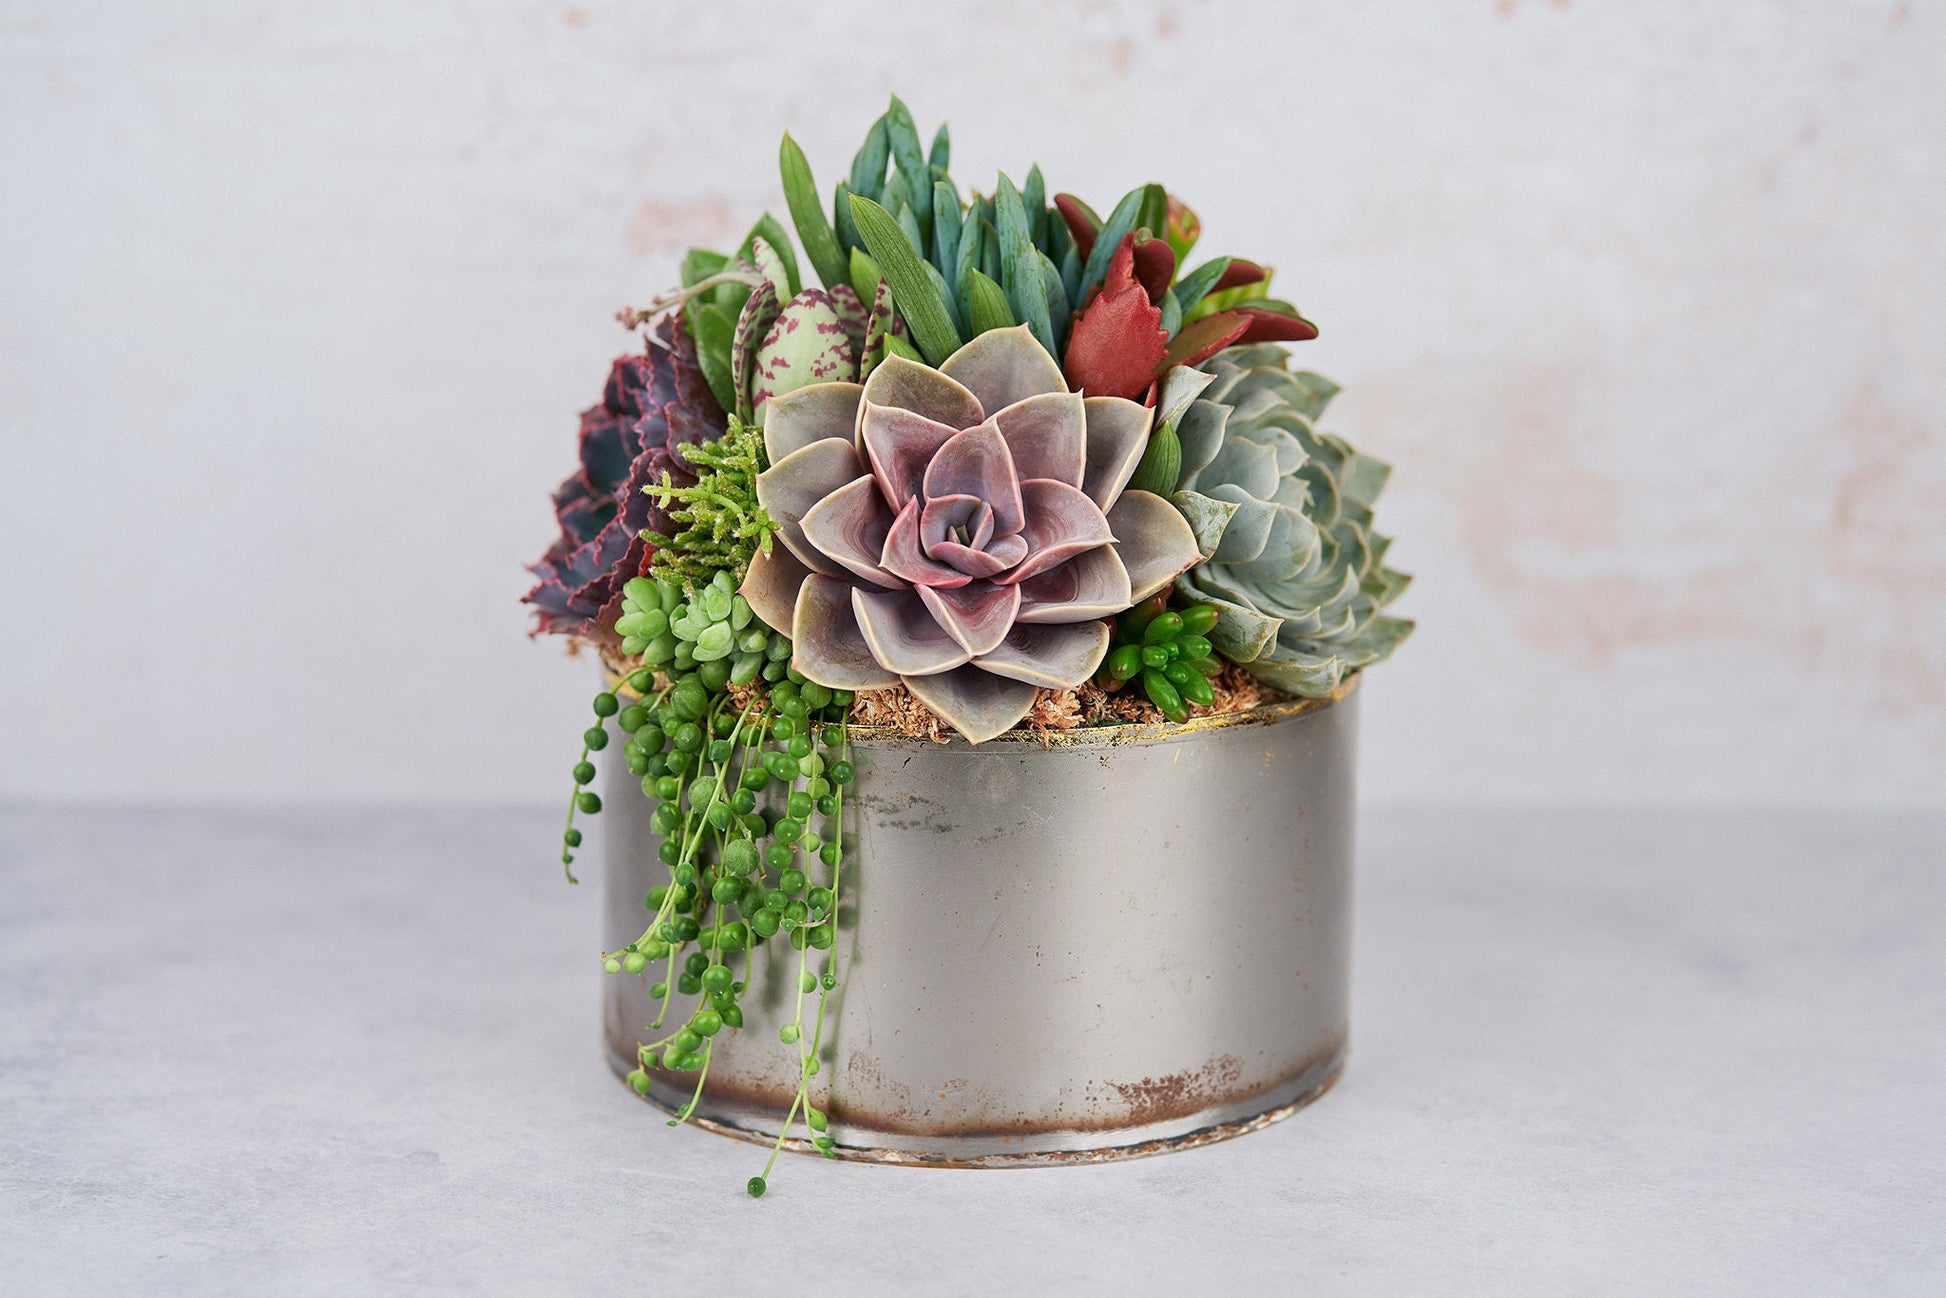 Industrial Metal Bowl Succulent Arrangement Planter: Modern Living Succulent Gift, Centerpiece for Weddings & Events, Housewarming Gift